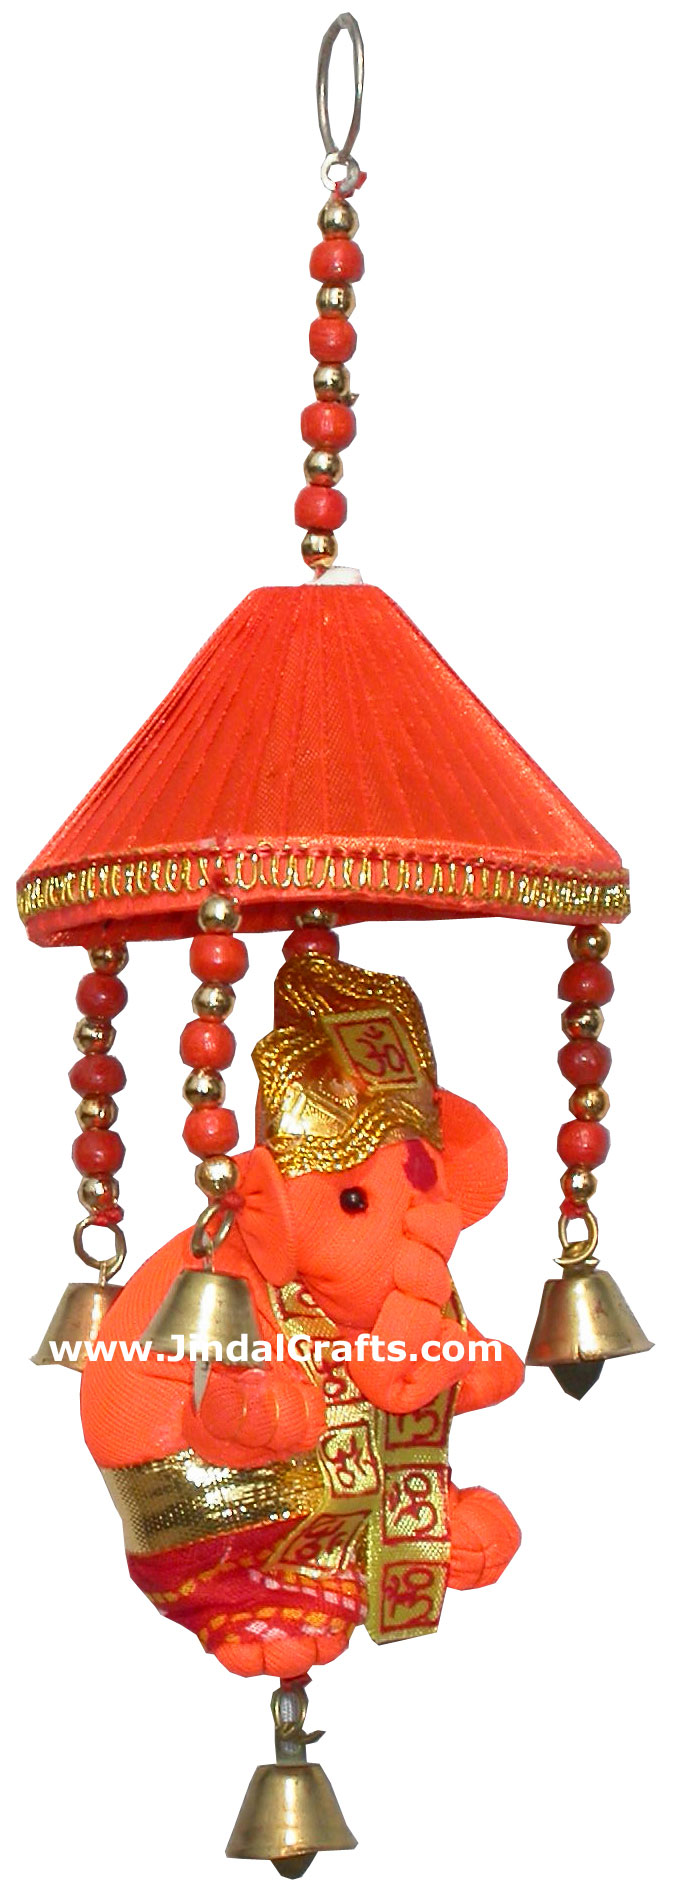 Lord Ganesha Hanging Home Decor India Handicraft Arts